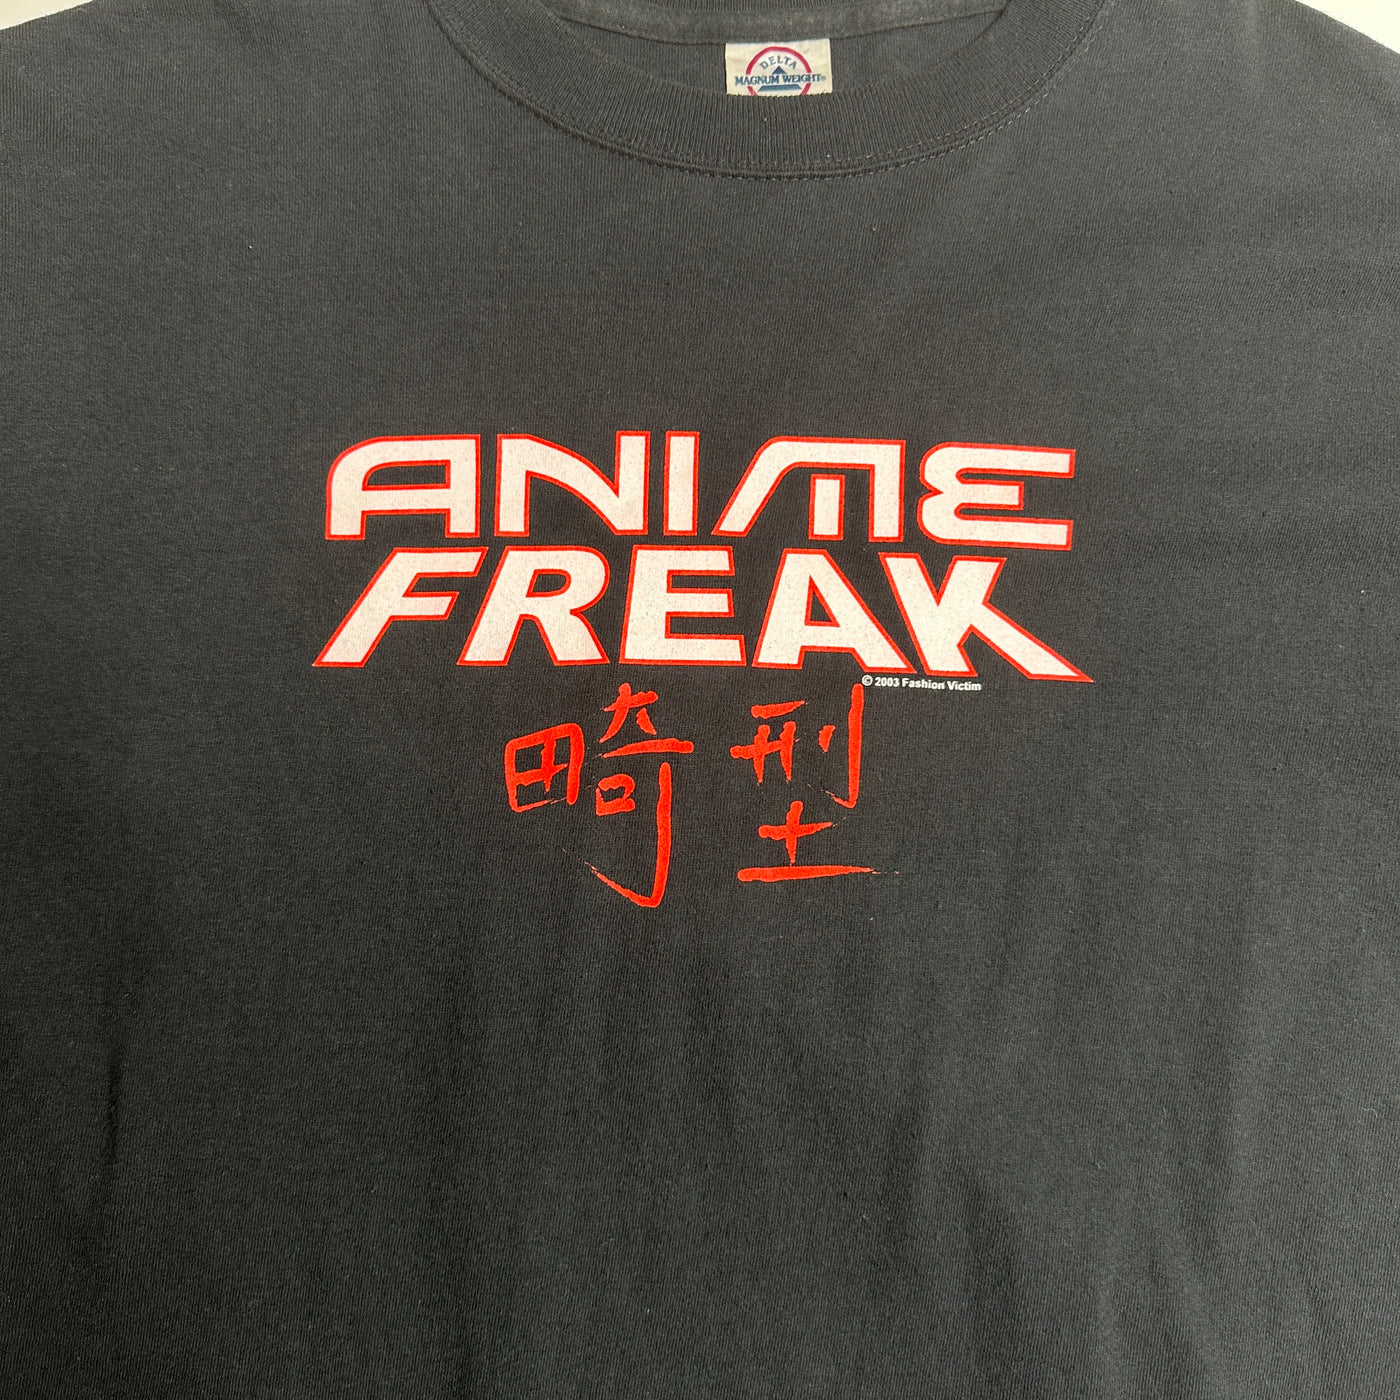 Fashion Victim Anime Freak T-shirt sz L